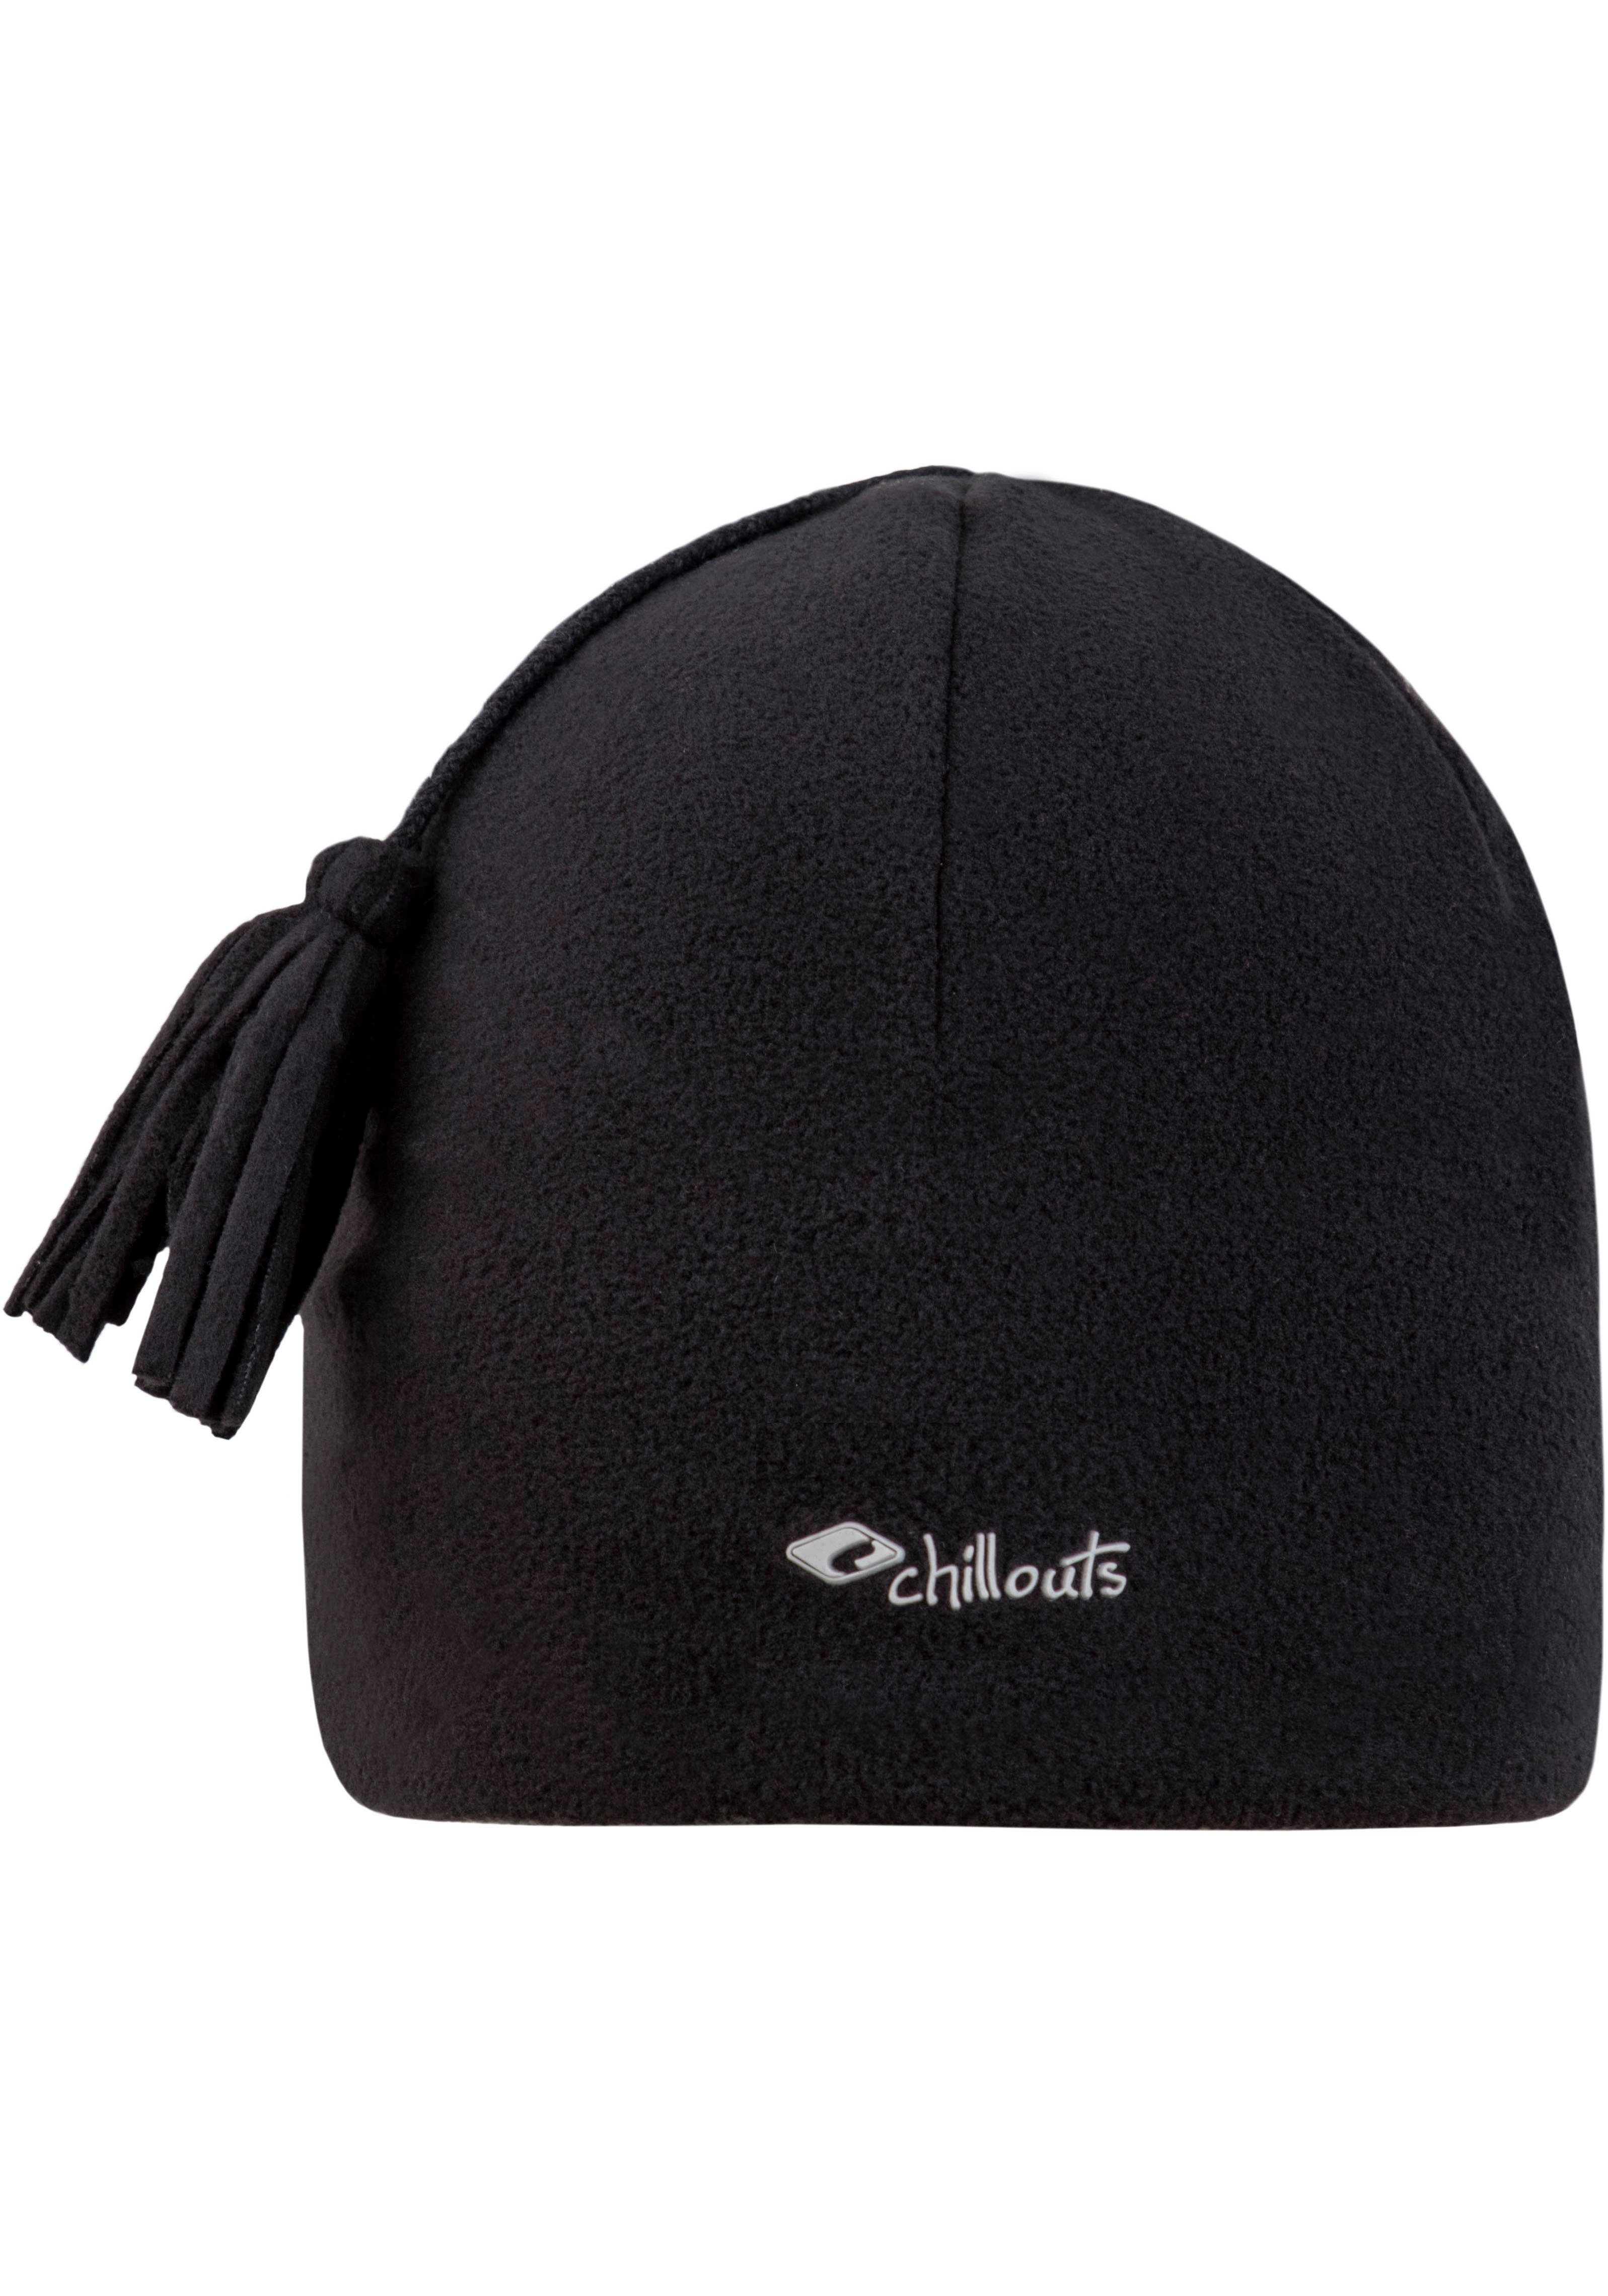 chillouts Fleecemütze Freeze Fleece Pom Hat black